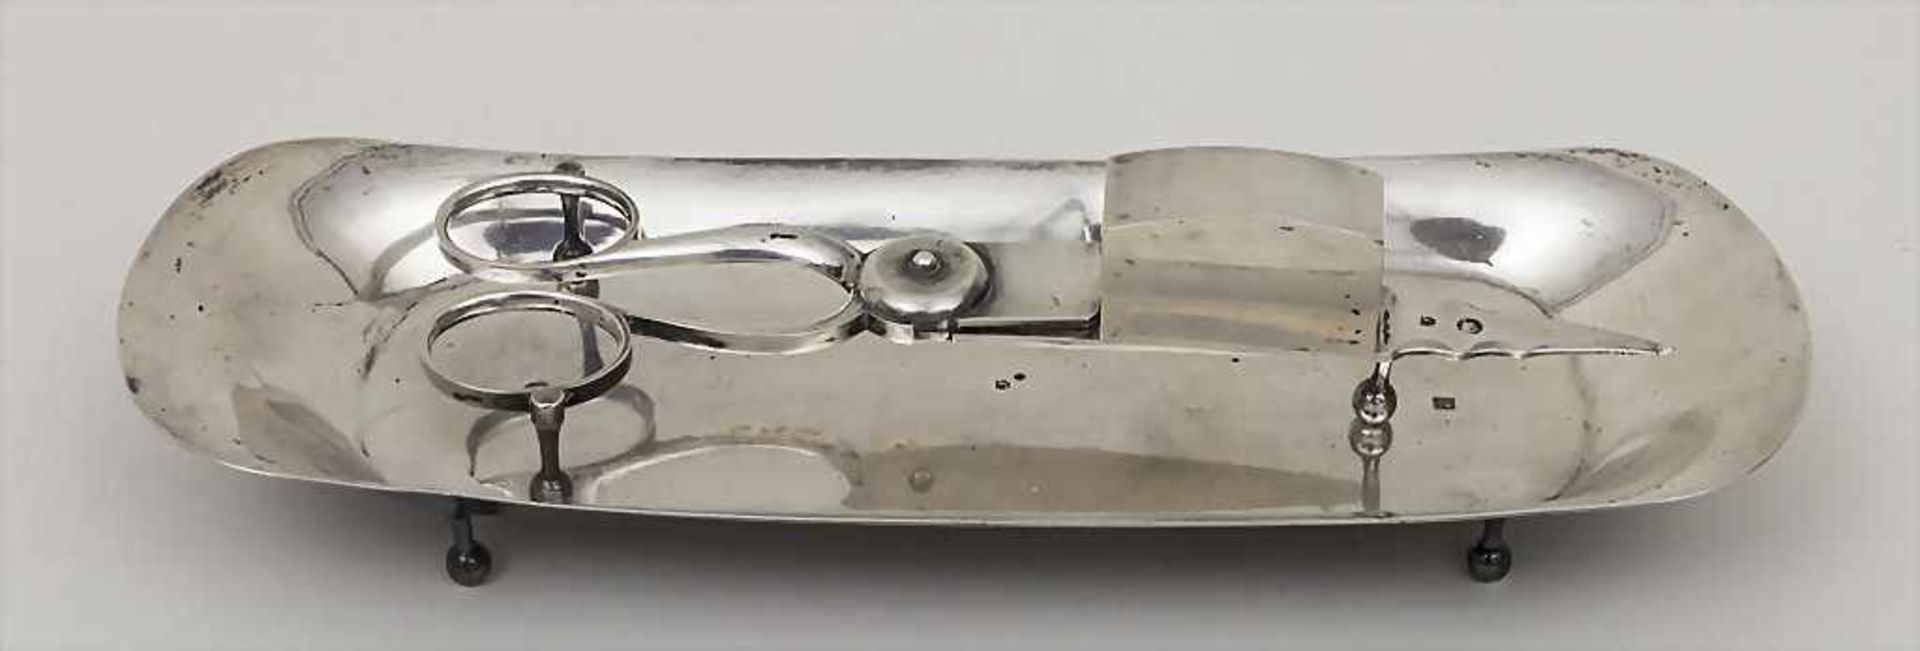 Dochtschere auf Tablett / A wick cutter / scissors with tray, Belgien/Belgium, 1831-1869Material: